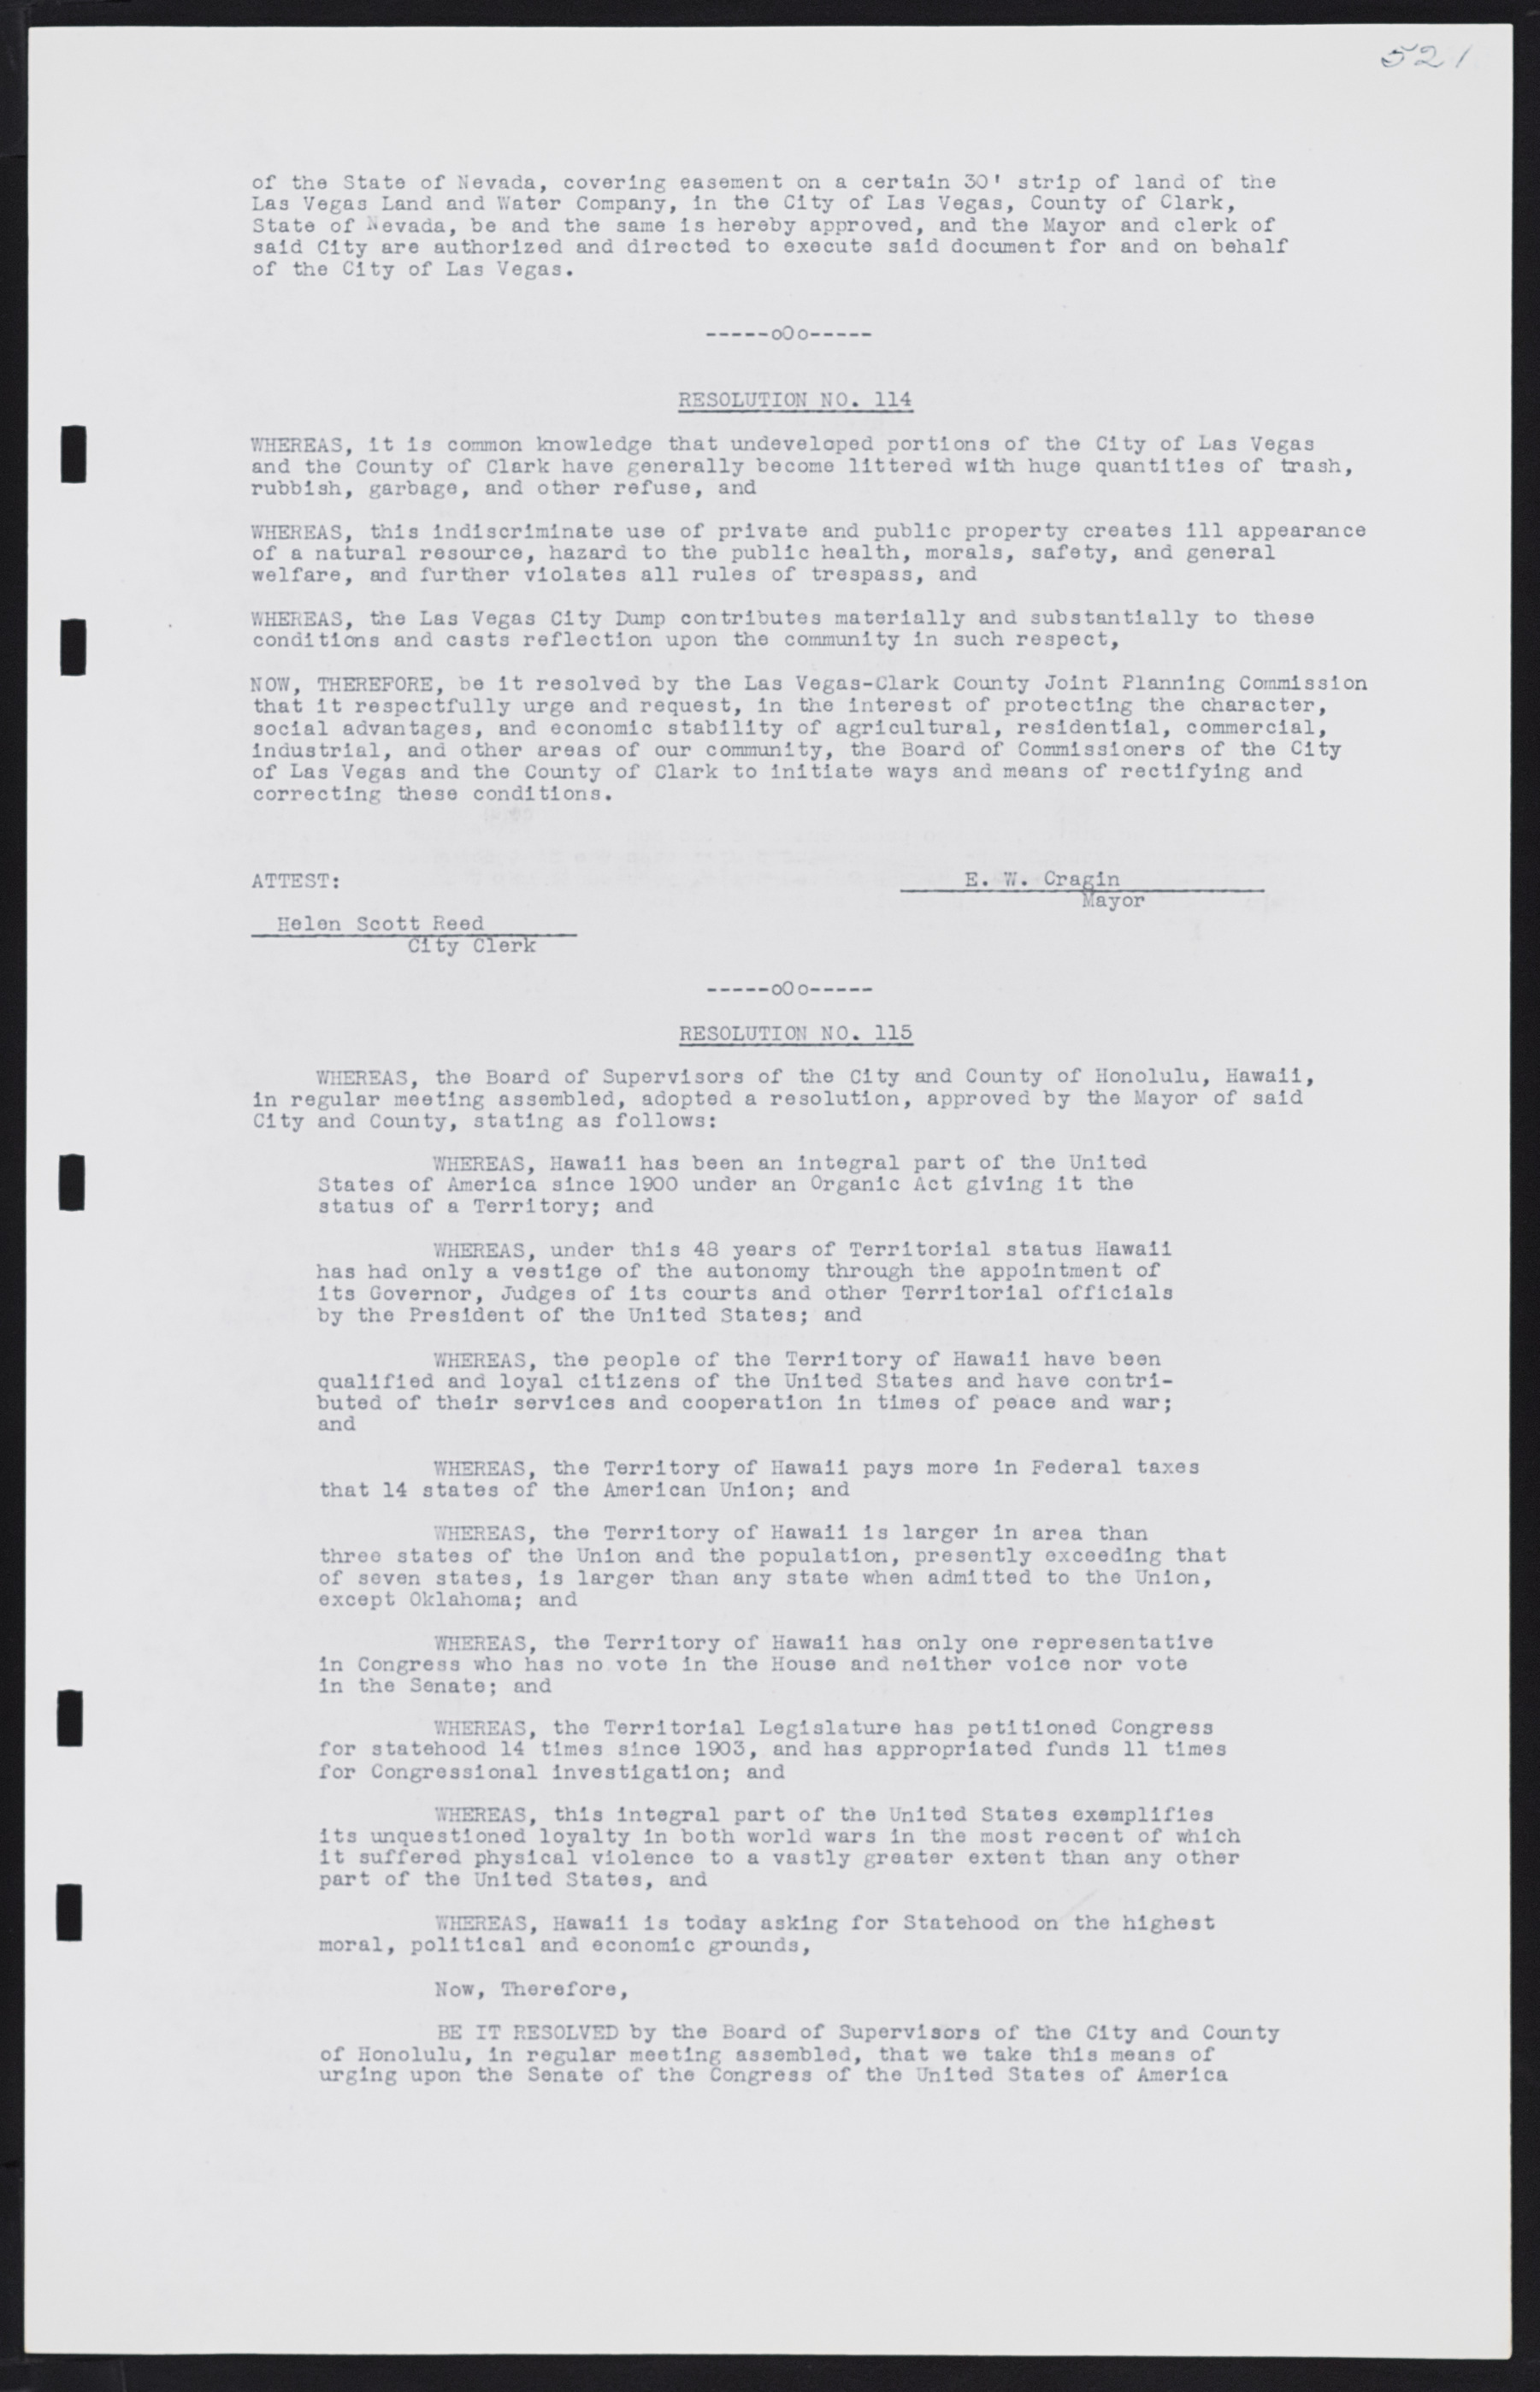 Las Vegas City Commission Minutes, January 7, 1947 to October 26, 1949, lvc000006-551